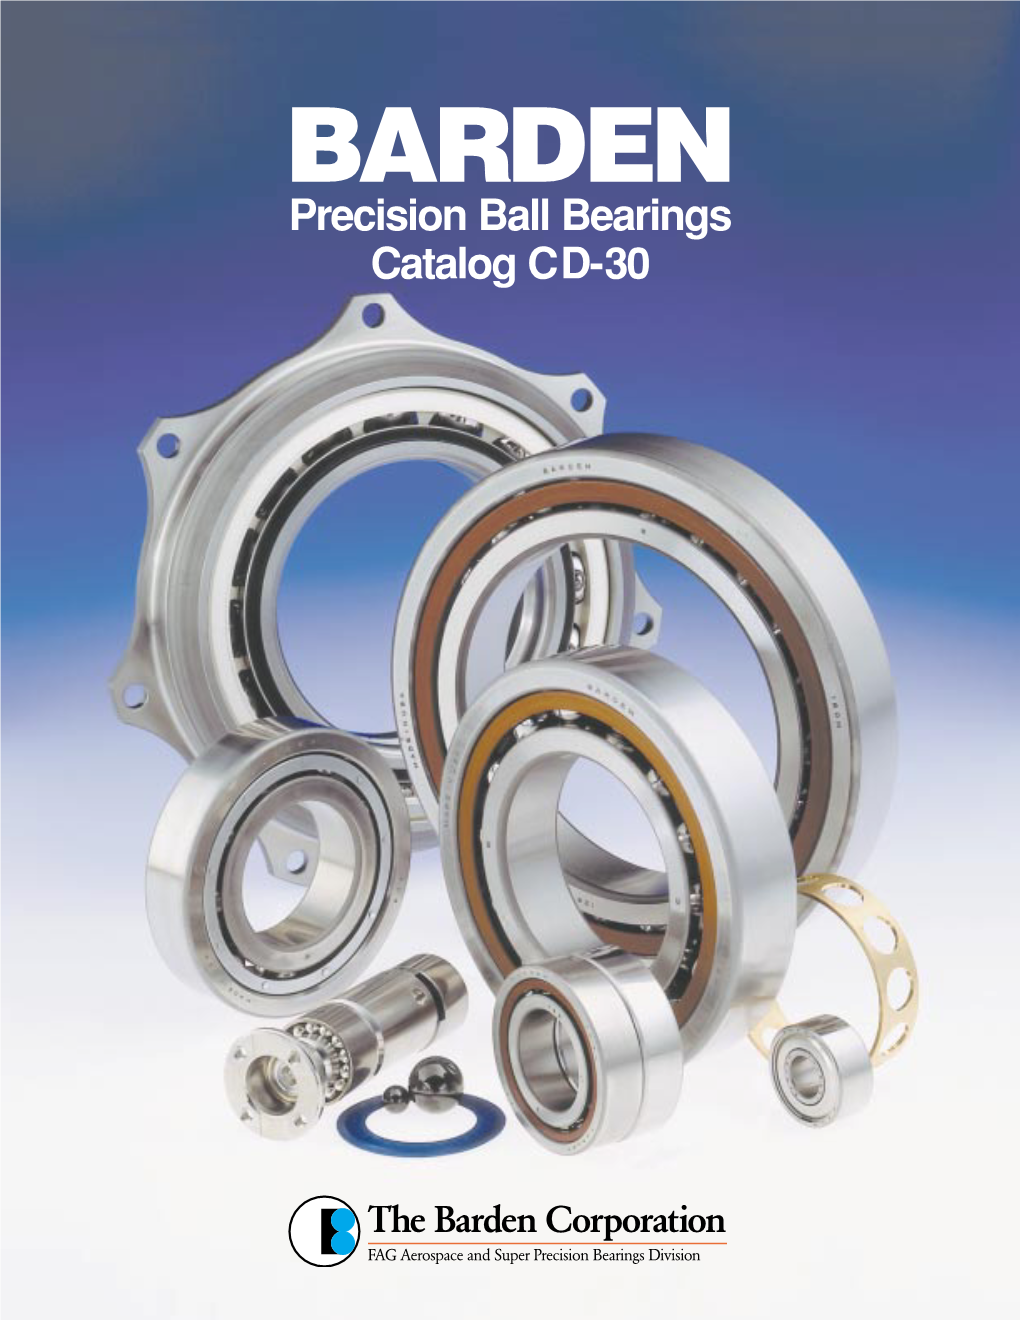 BARDEN Precision Ball Bearings Catalog CD-30 INTRODUCTION